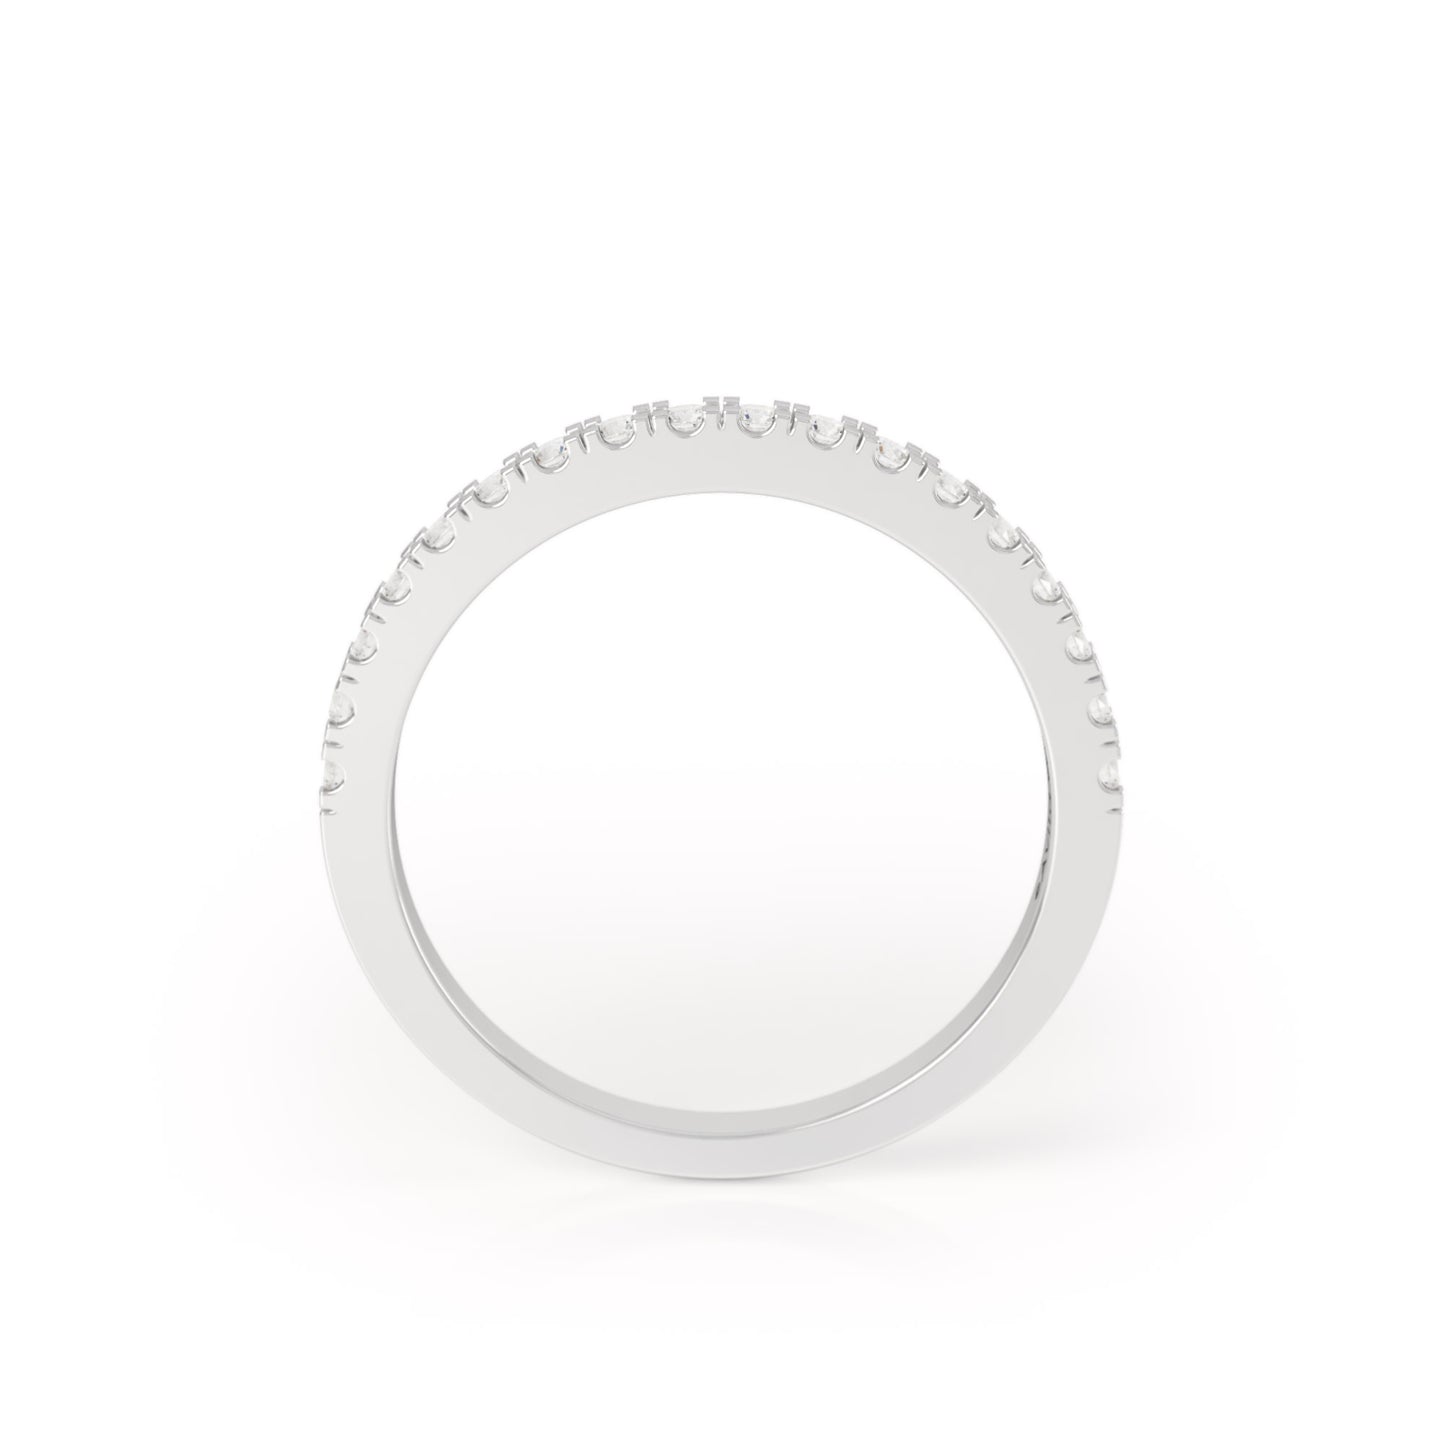 SYNERGI unisex Diamond Eternity Ring in Platinum